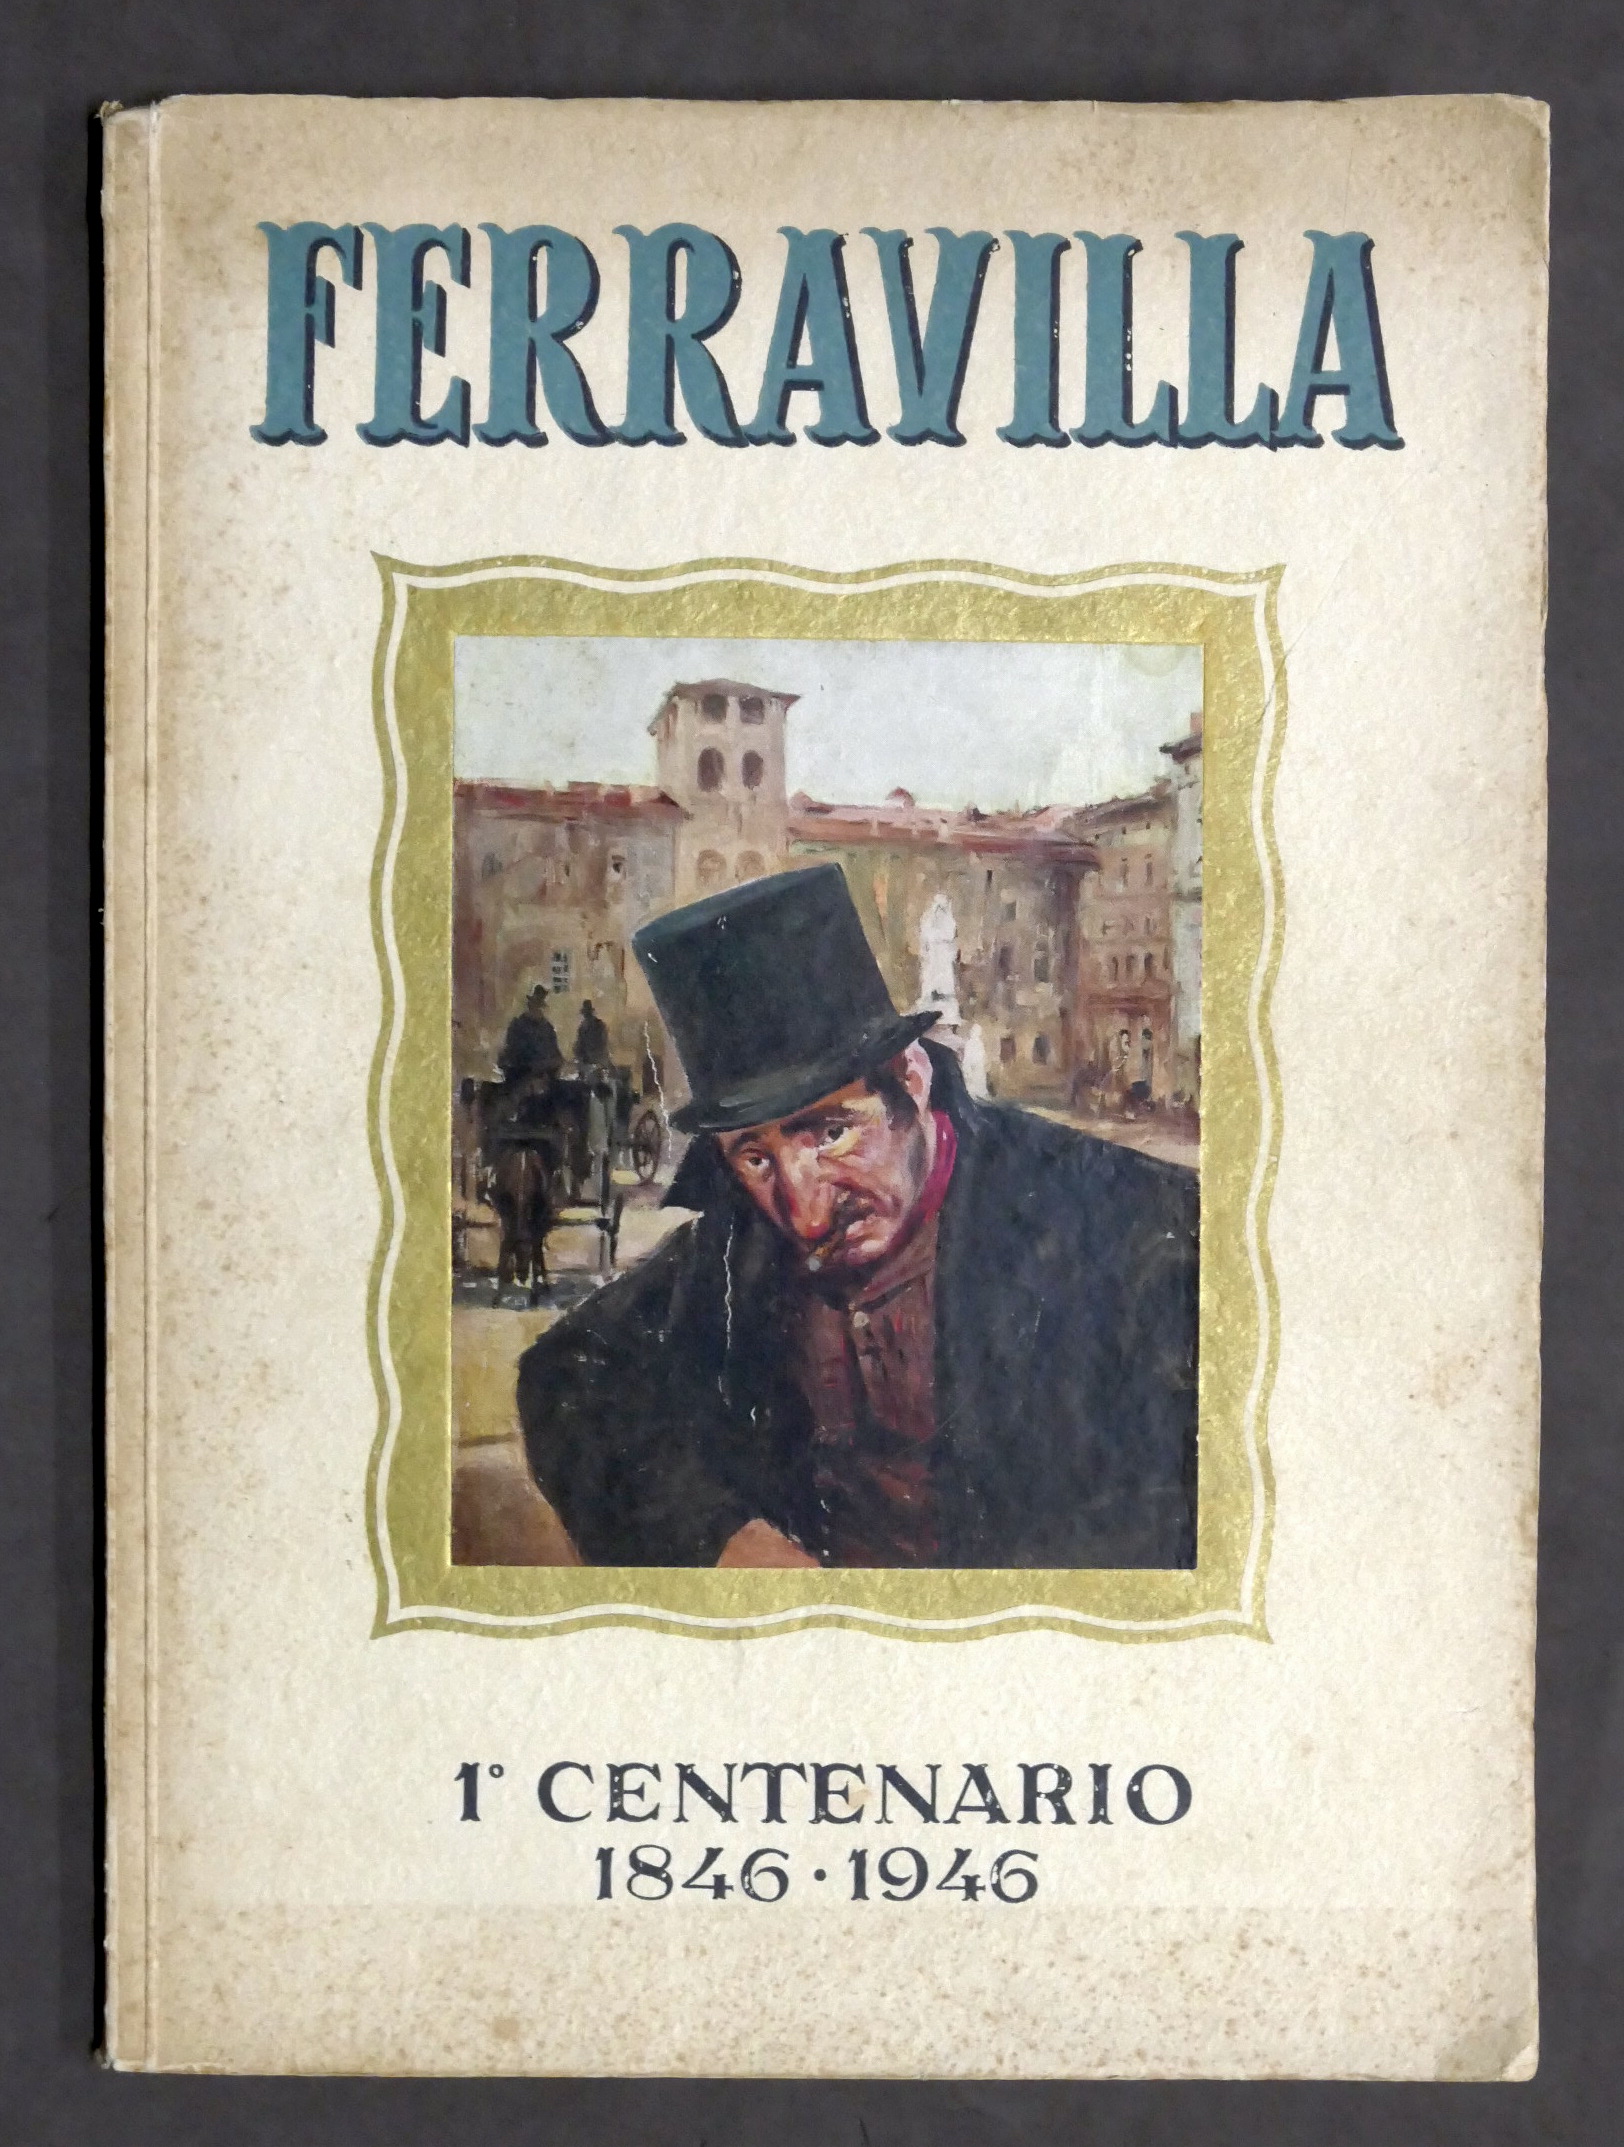 Teatro Cinema - S. Tuscano - Ferravilla 1° centenario 1846-1946 …